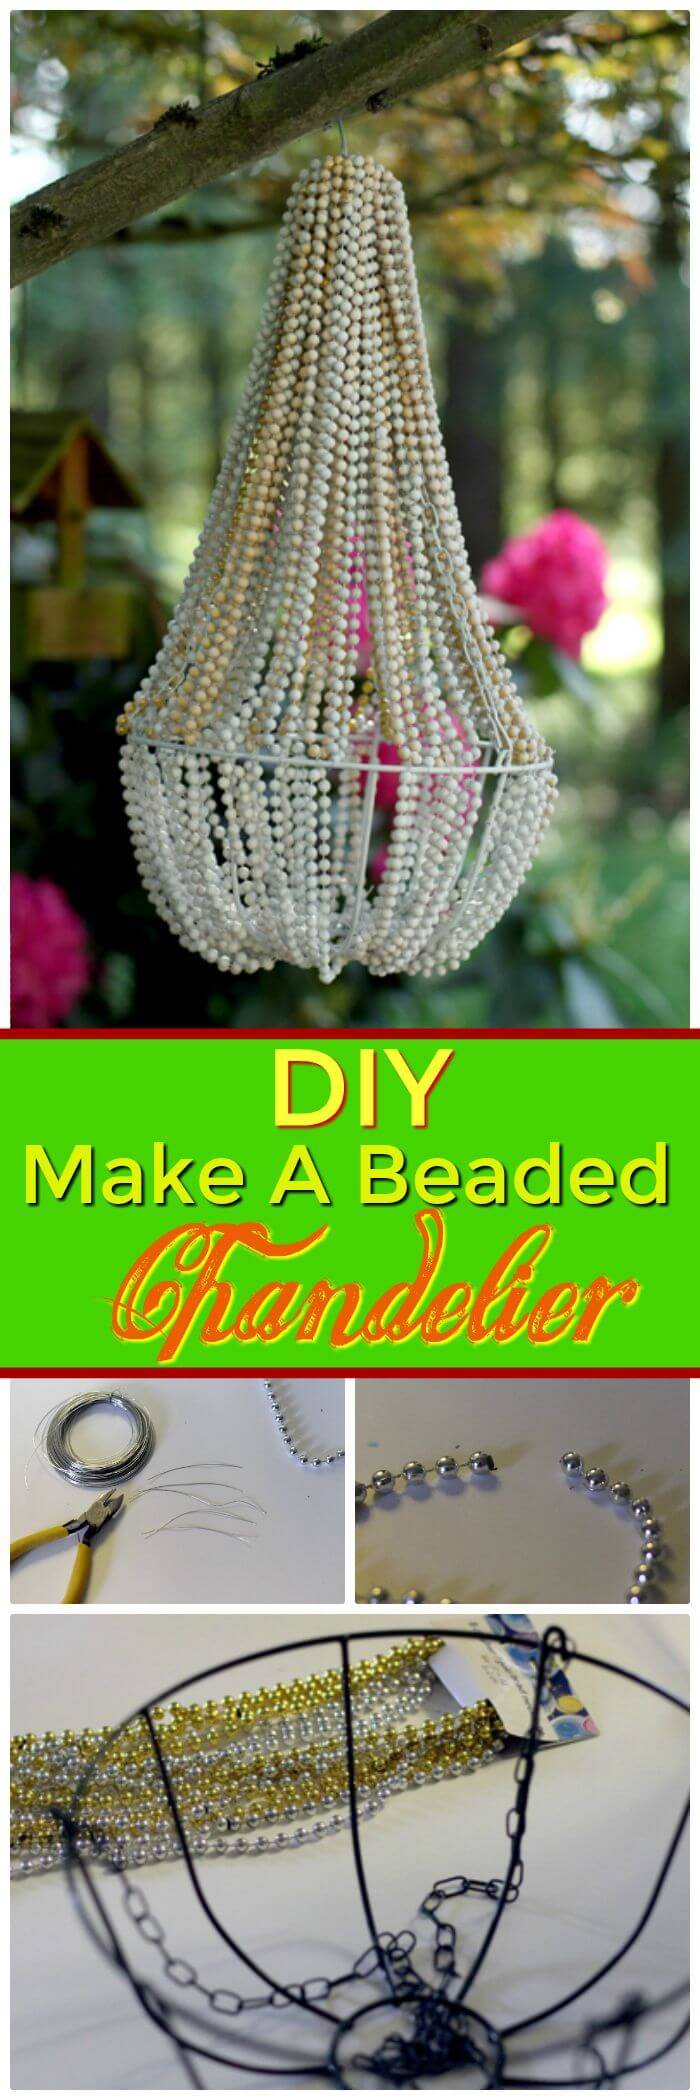 Make a Beaded Chandelier - DIY Dollar Store Crafts 